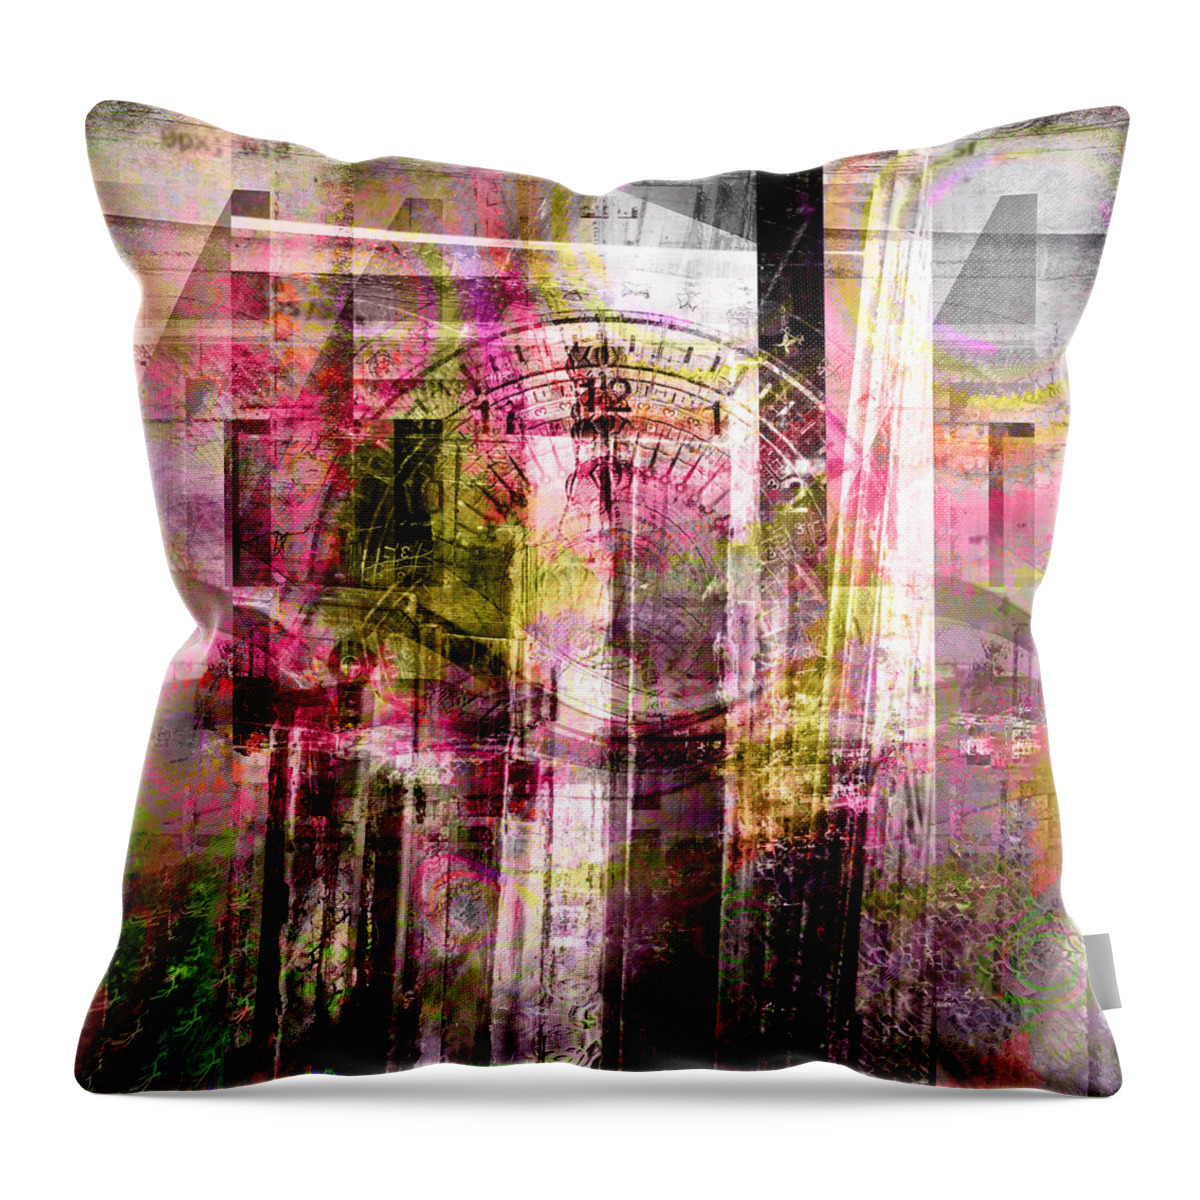 Art Throw Pillow featuring the digital art Precise Vs Vague by Art Di